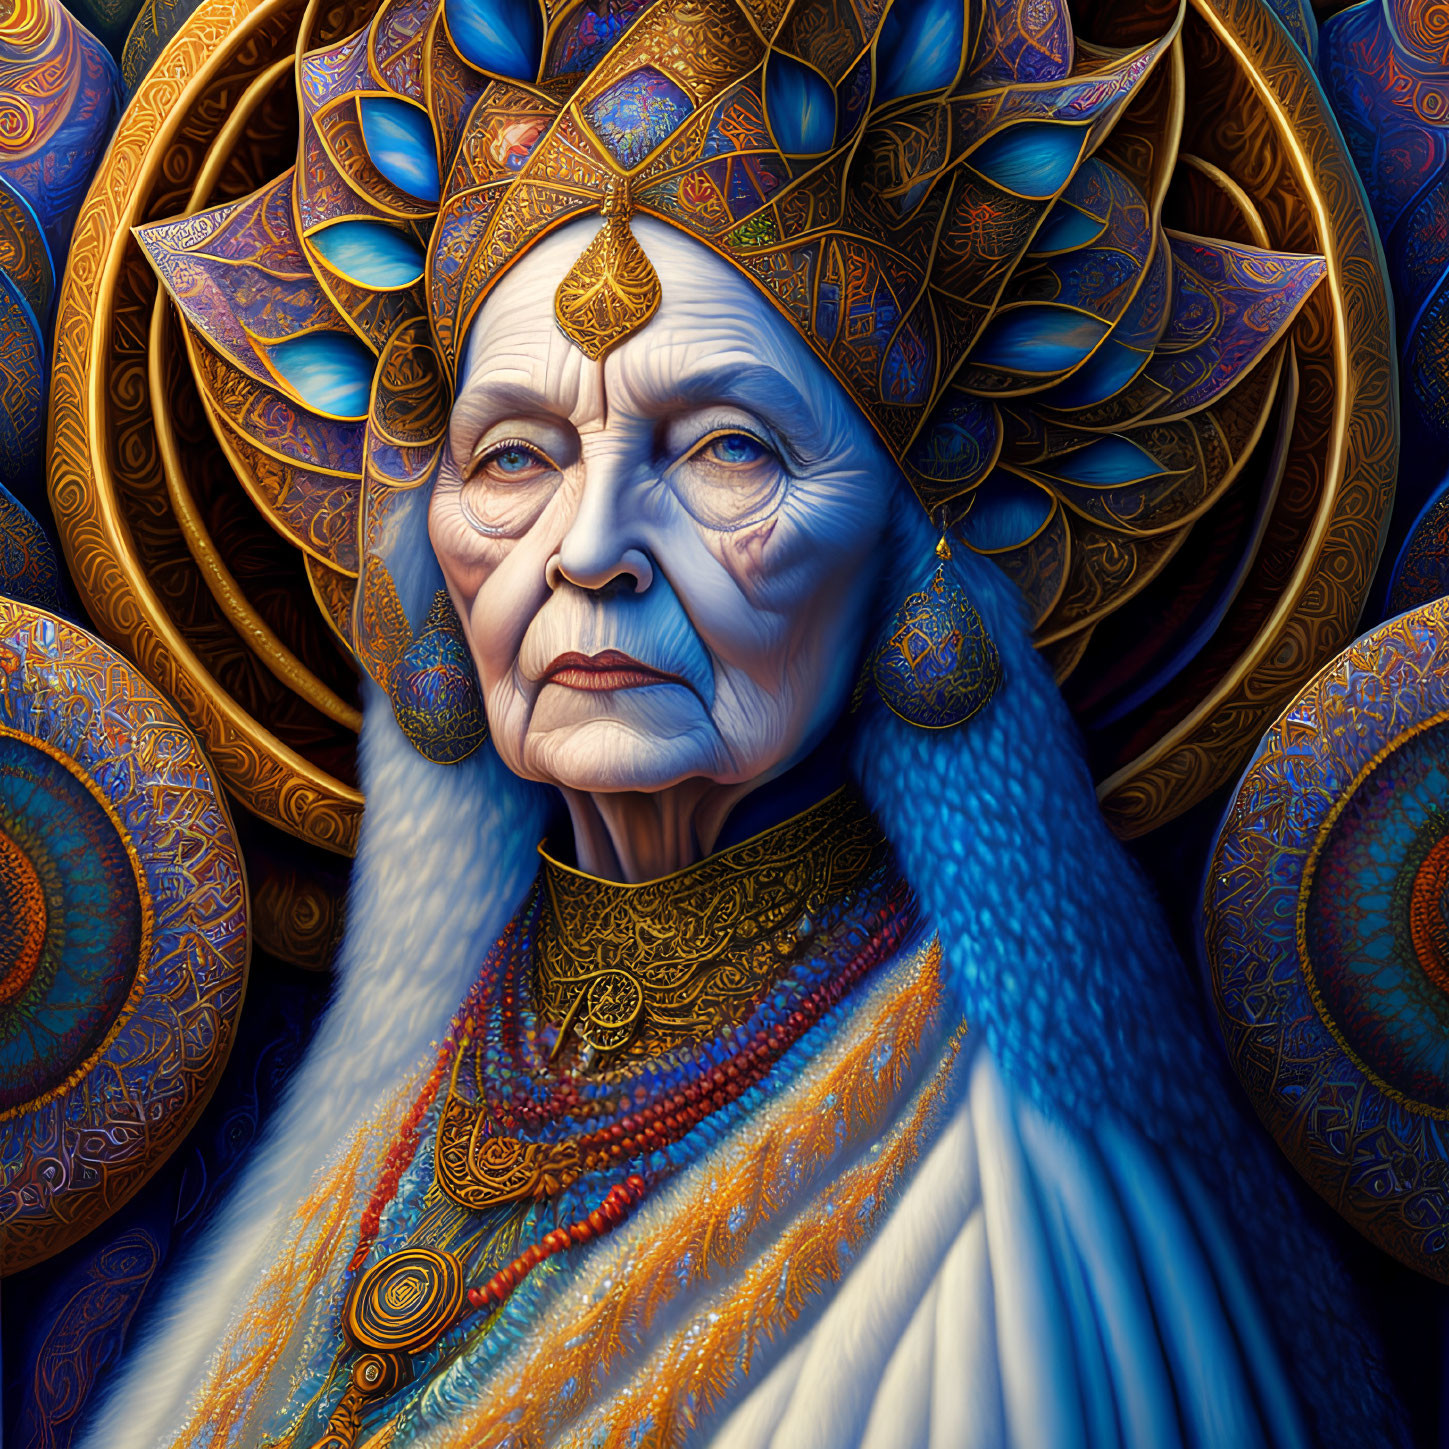 Regal elder woman in ornate blue and gold attire